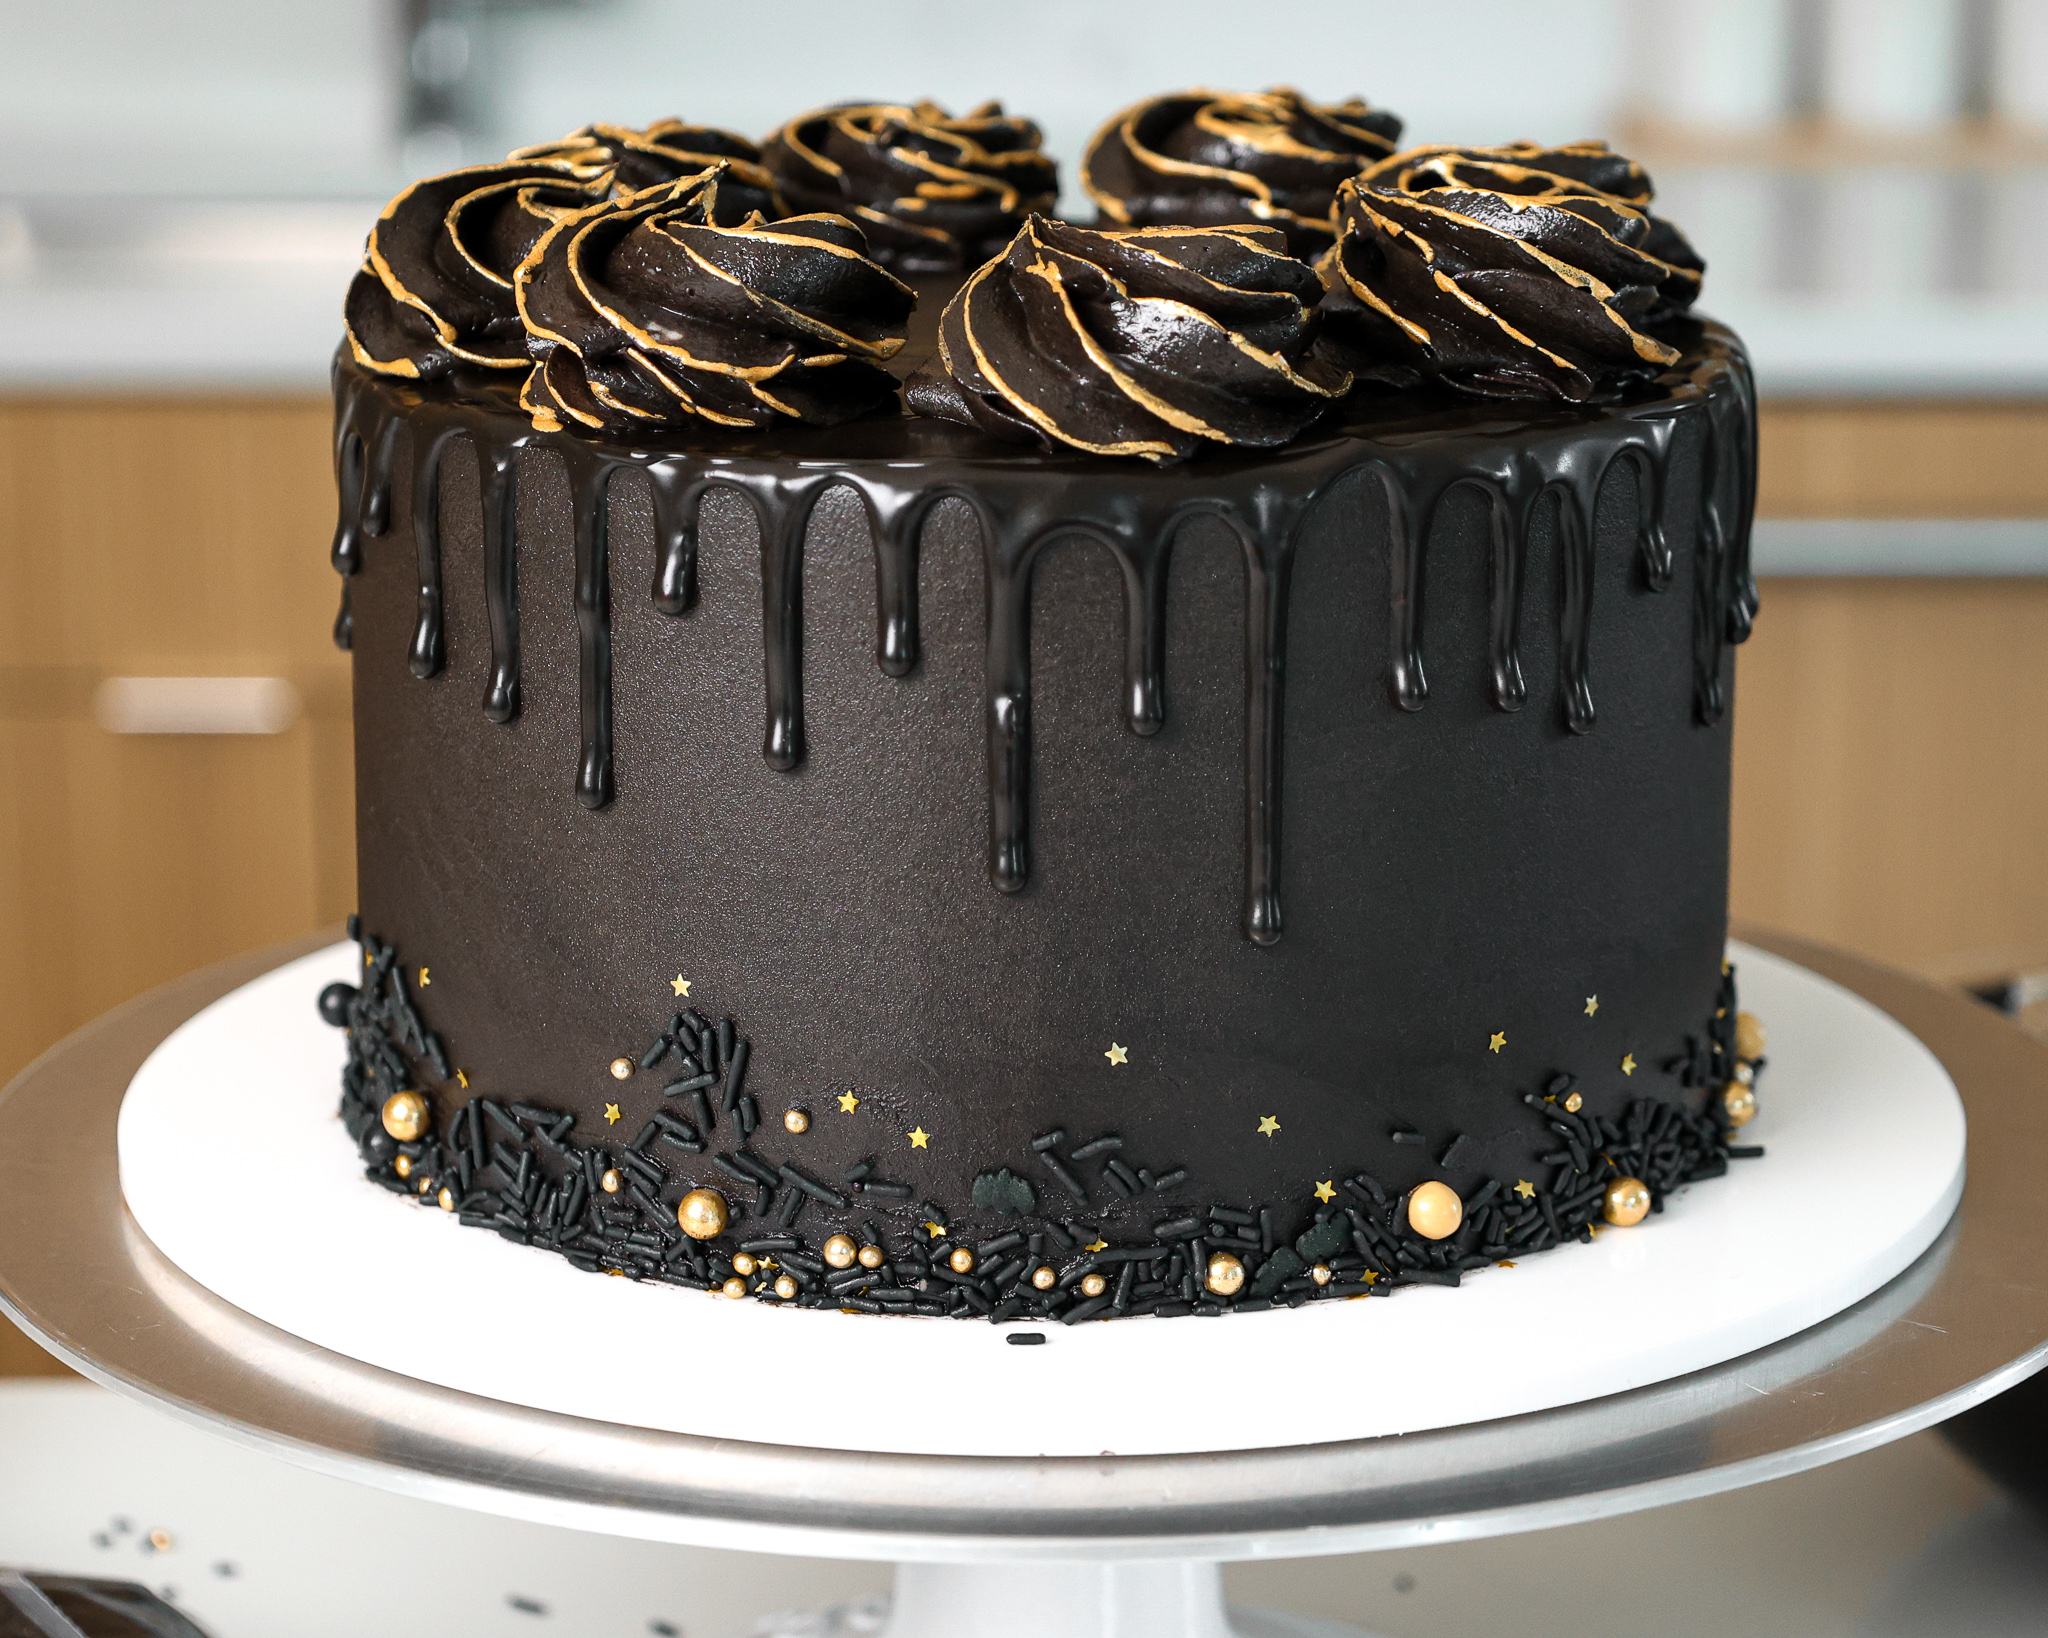 Details more than 76 black cake images super hot - awesomeenglish.edu.vn